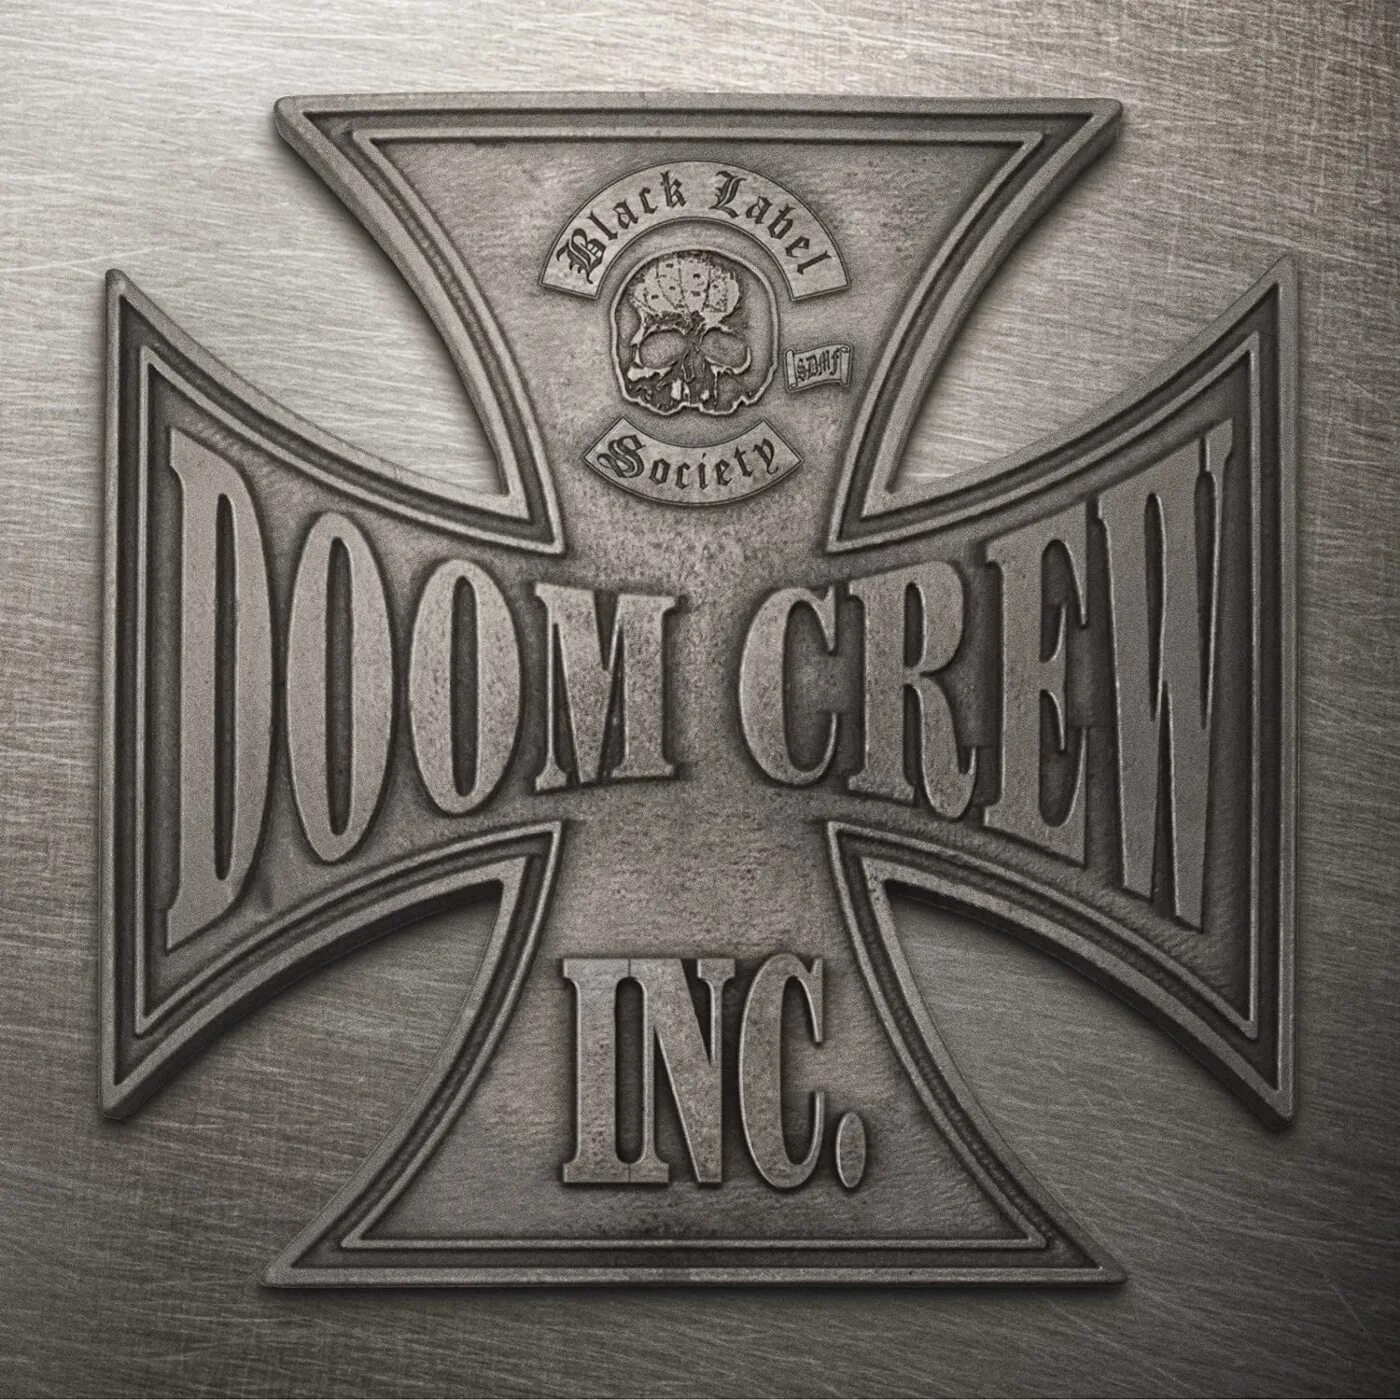 Black Label Society Doom Crew. Black Label Society Doom Crew Inc.. Black Label Society 2021. Black Label Society 2021 задняя обложка CD Doom Crew Inc.